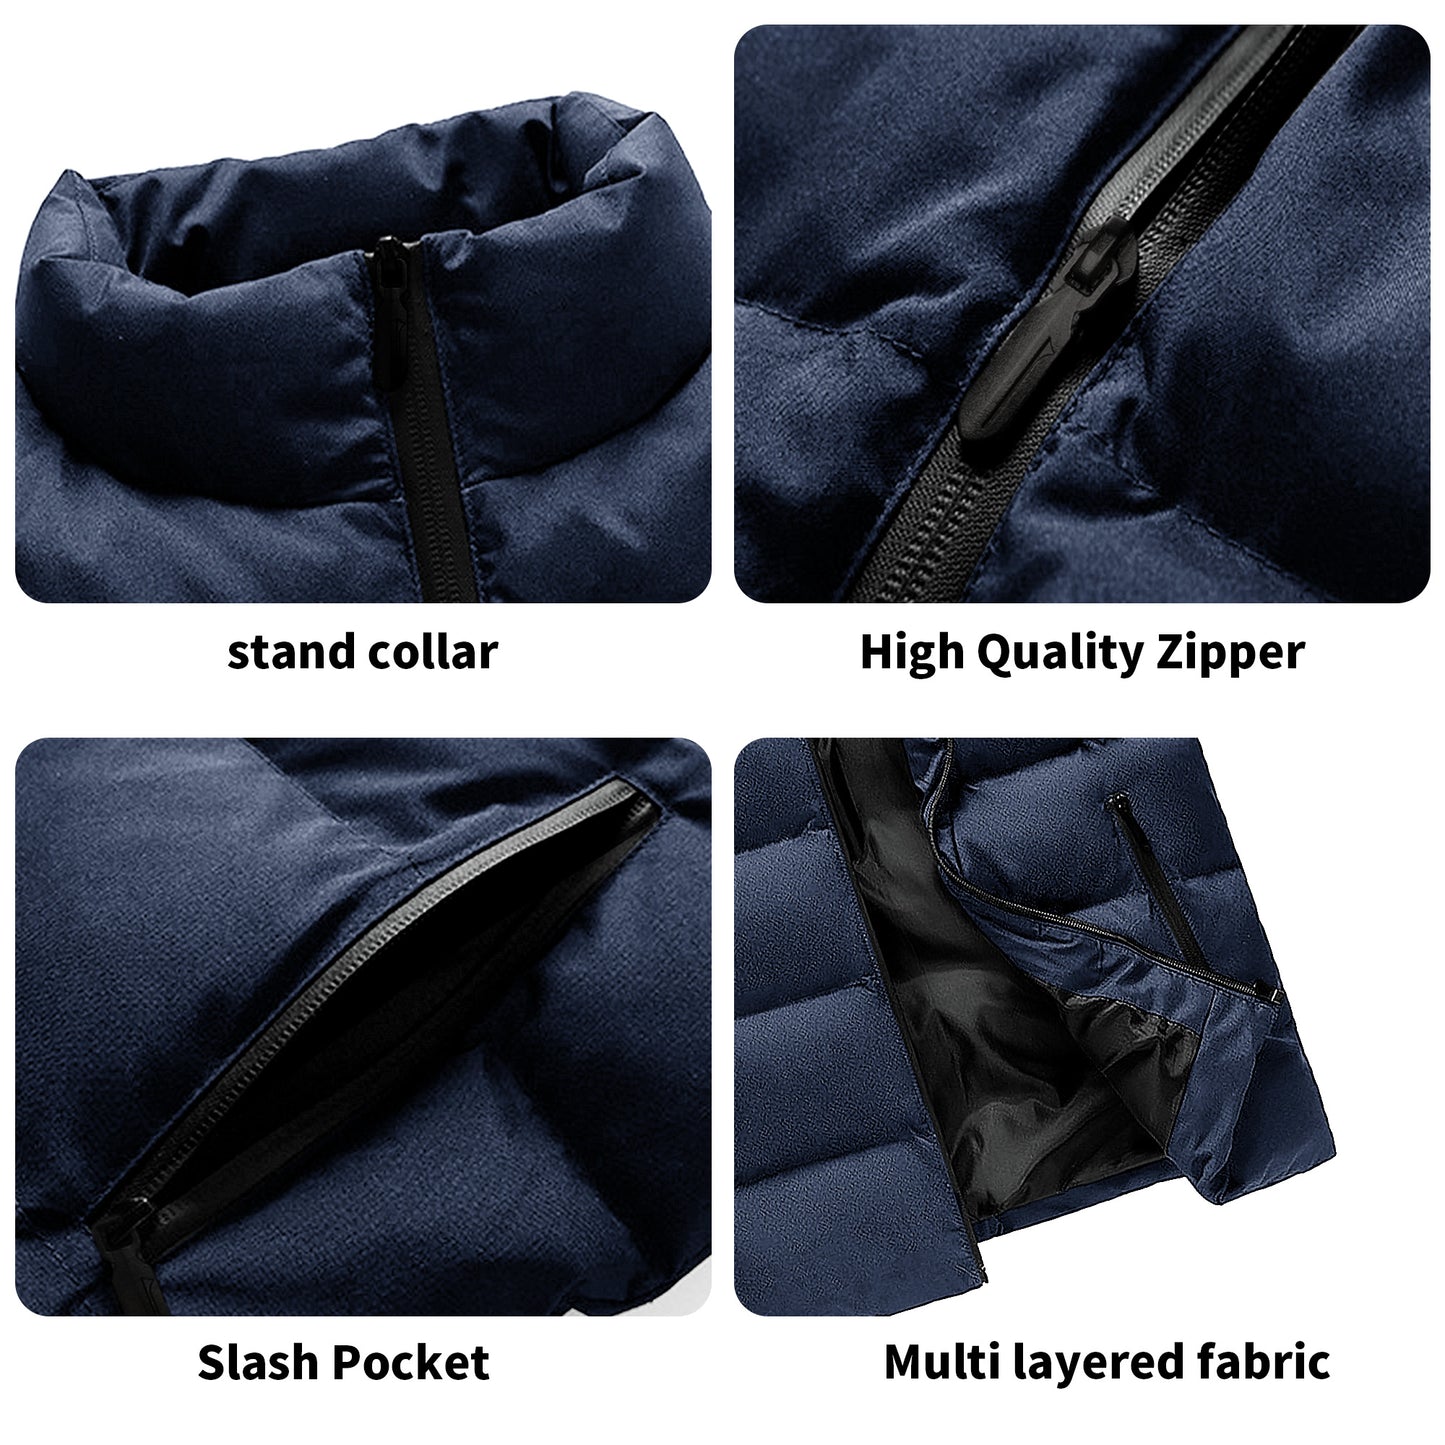 Mens Warm Stand Collar   L❤️VE Zip Up Puffer Vest